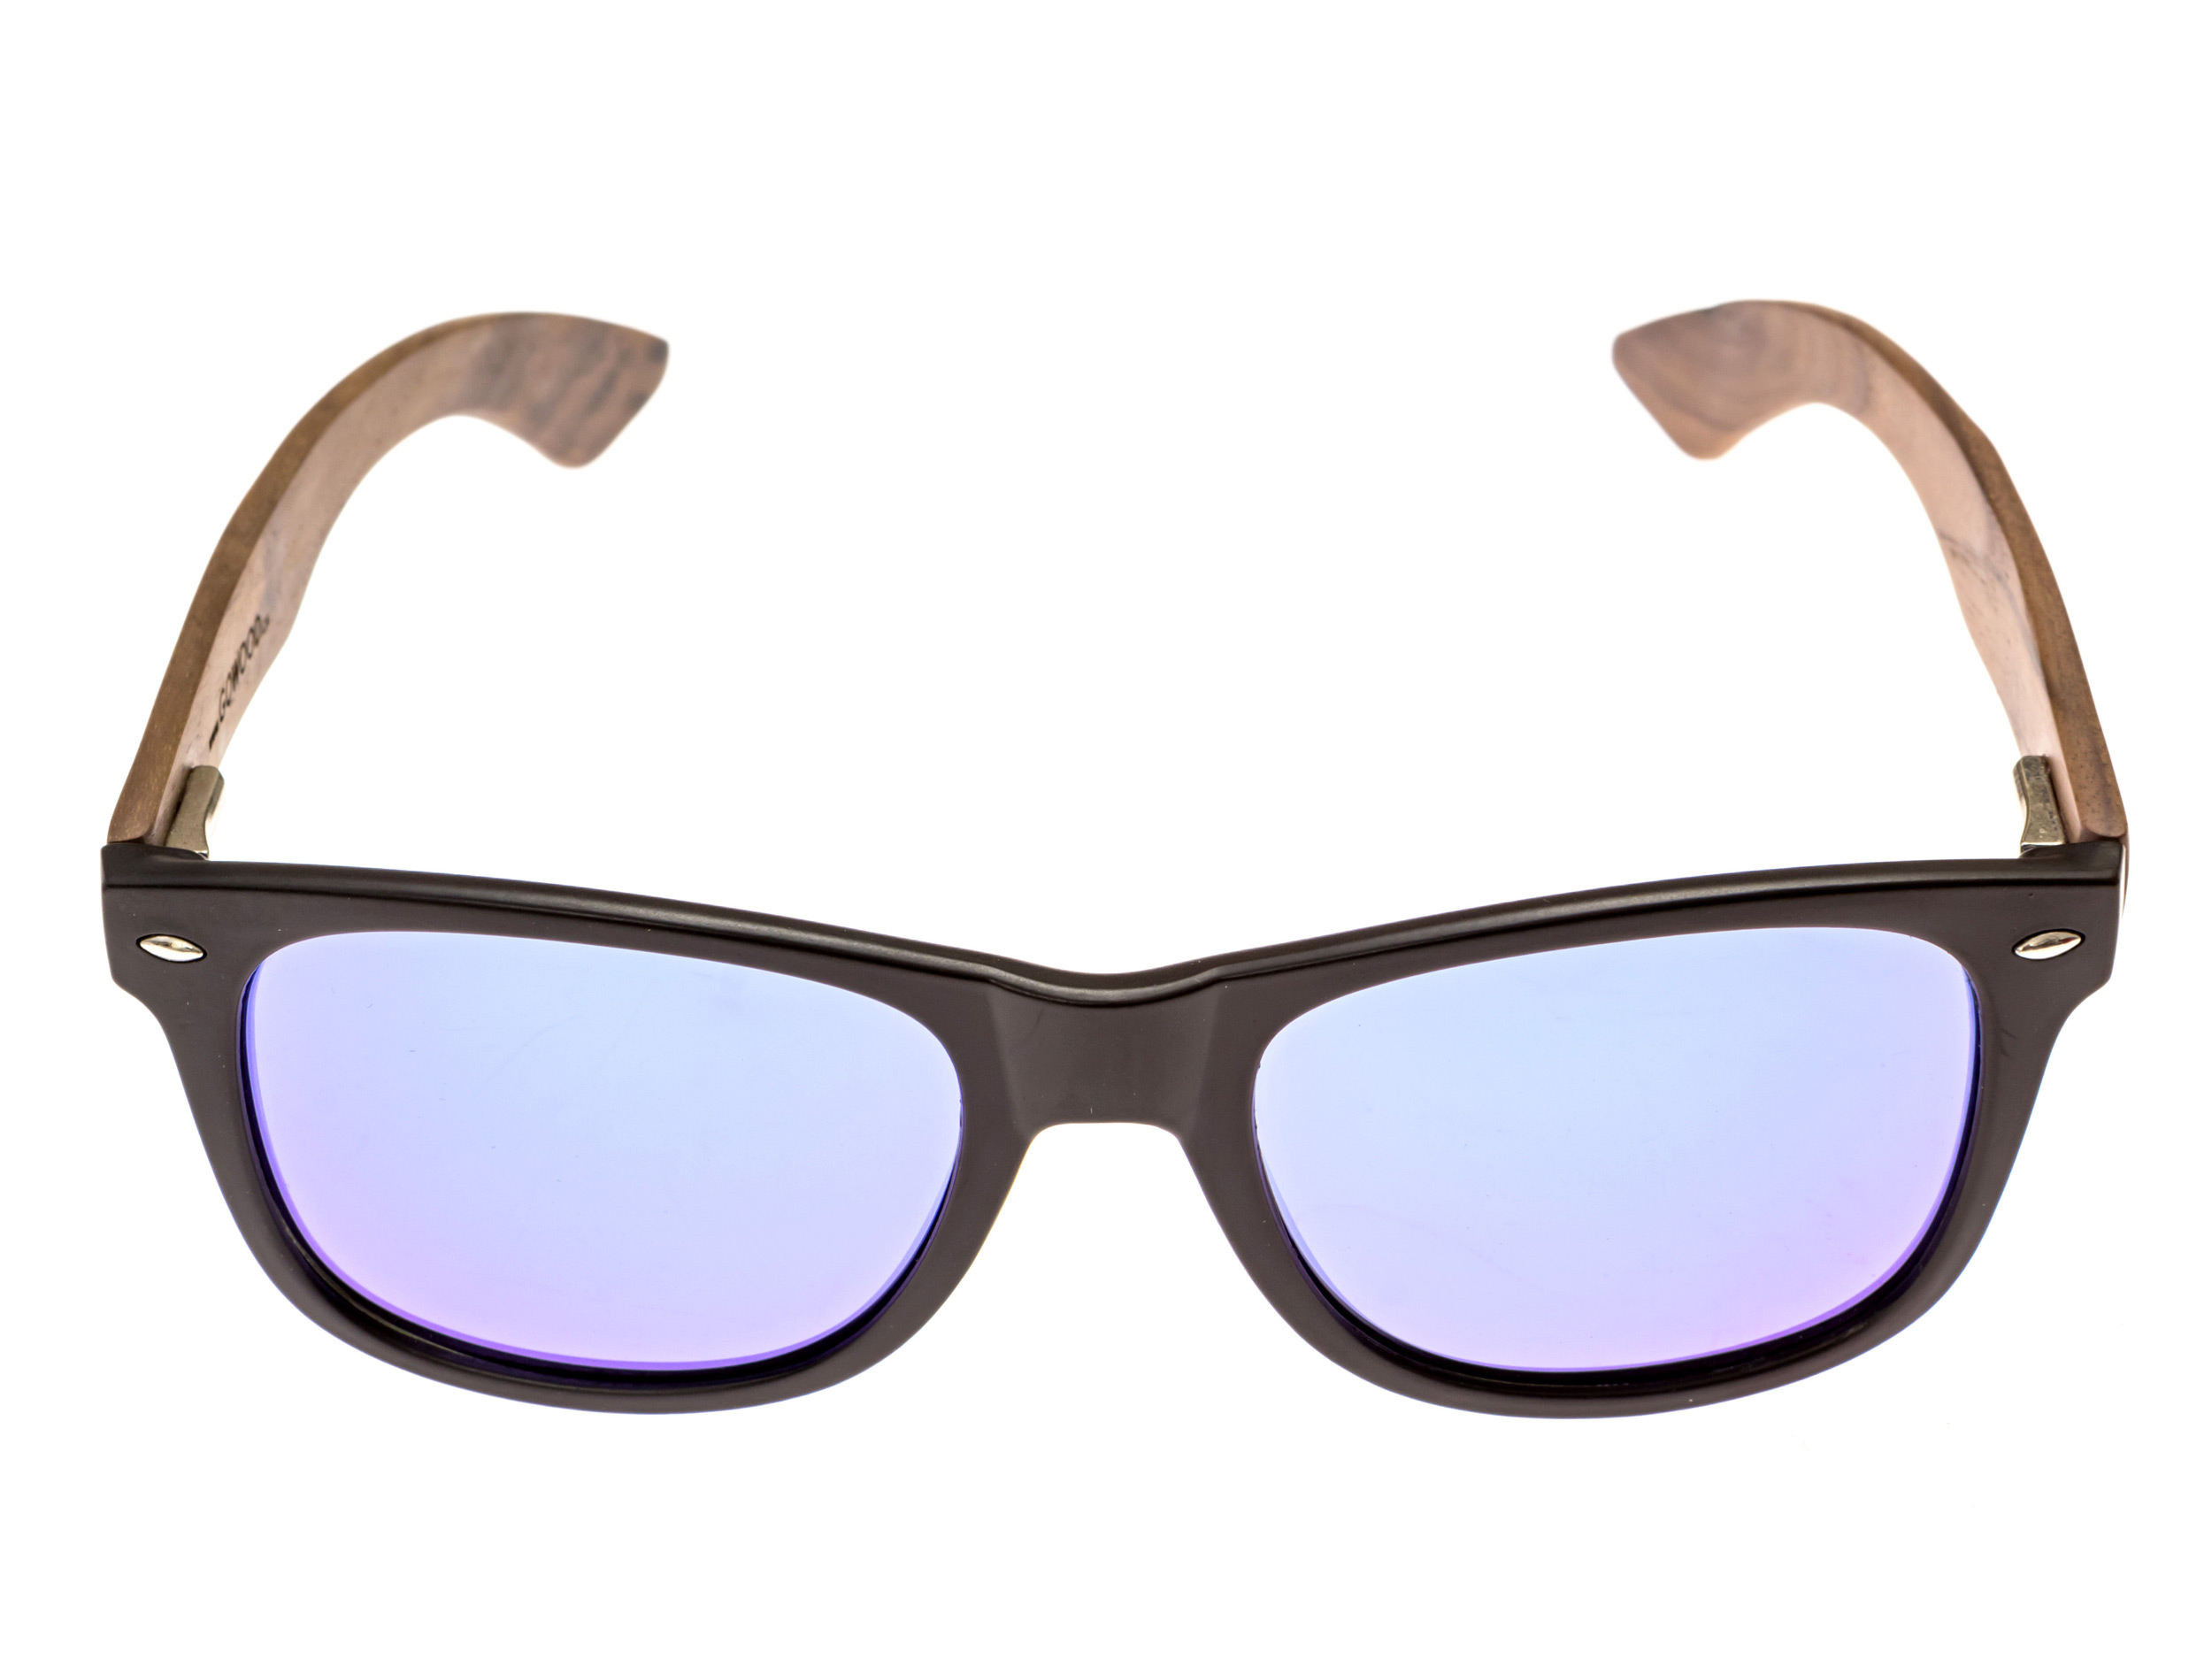 Walnut wood wayfarer sunglasses blue mirrored lenses - front